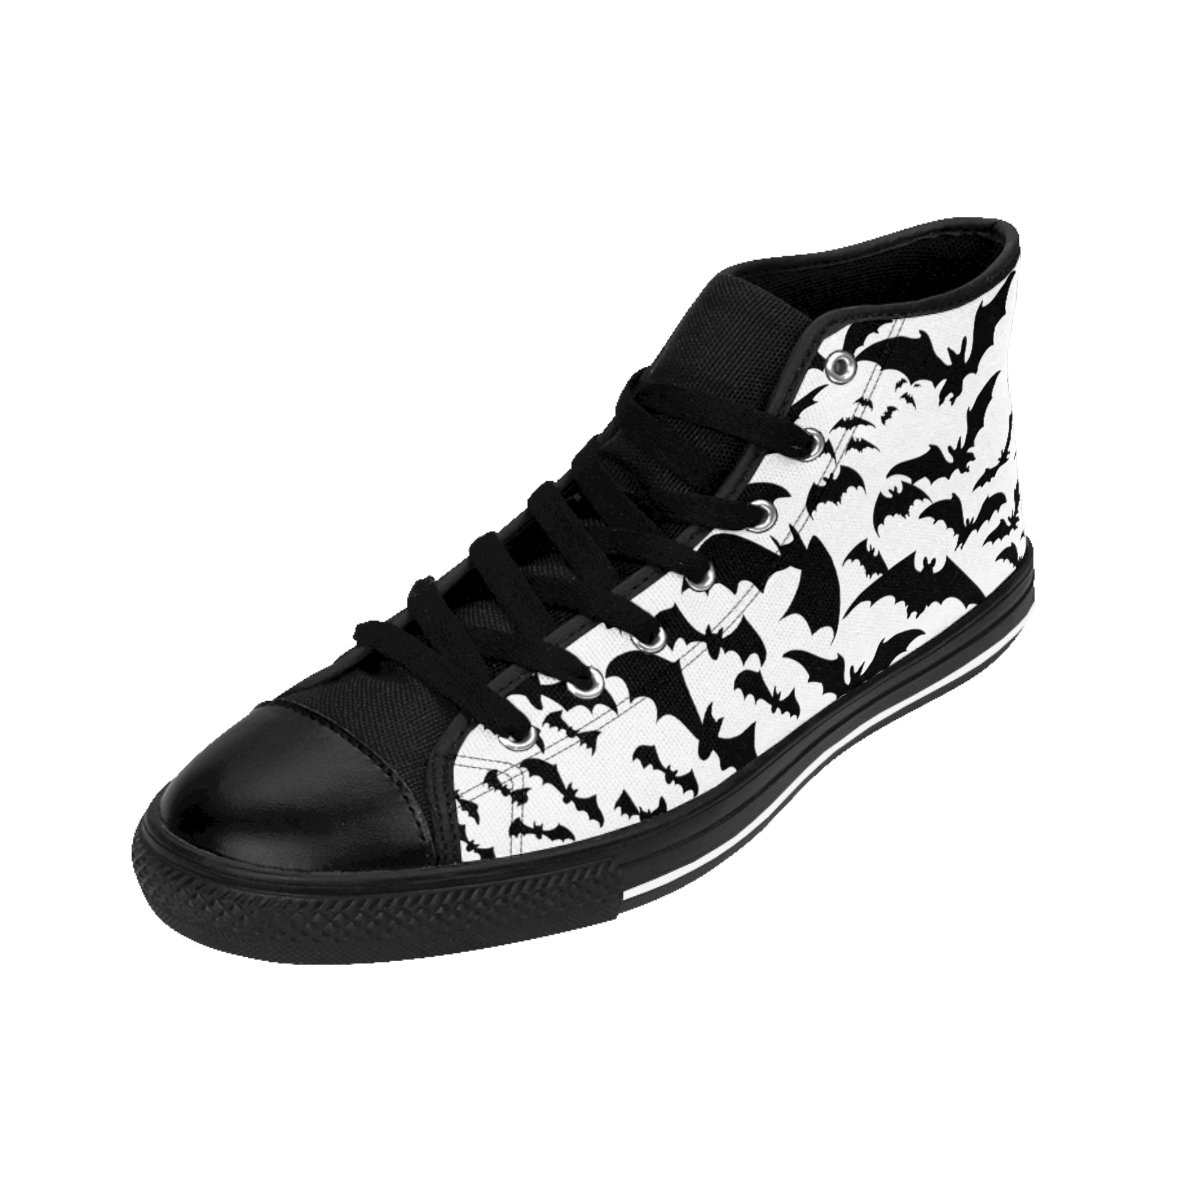 Mens Goth Shoes Bat Pattern Sneakers Batty Creepy Dark Aesthetic Footwear Alt Edgy Black White Vampire Gothic High Tops Macabre Gift Idea